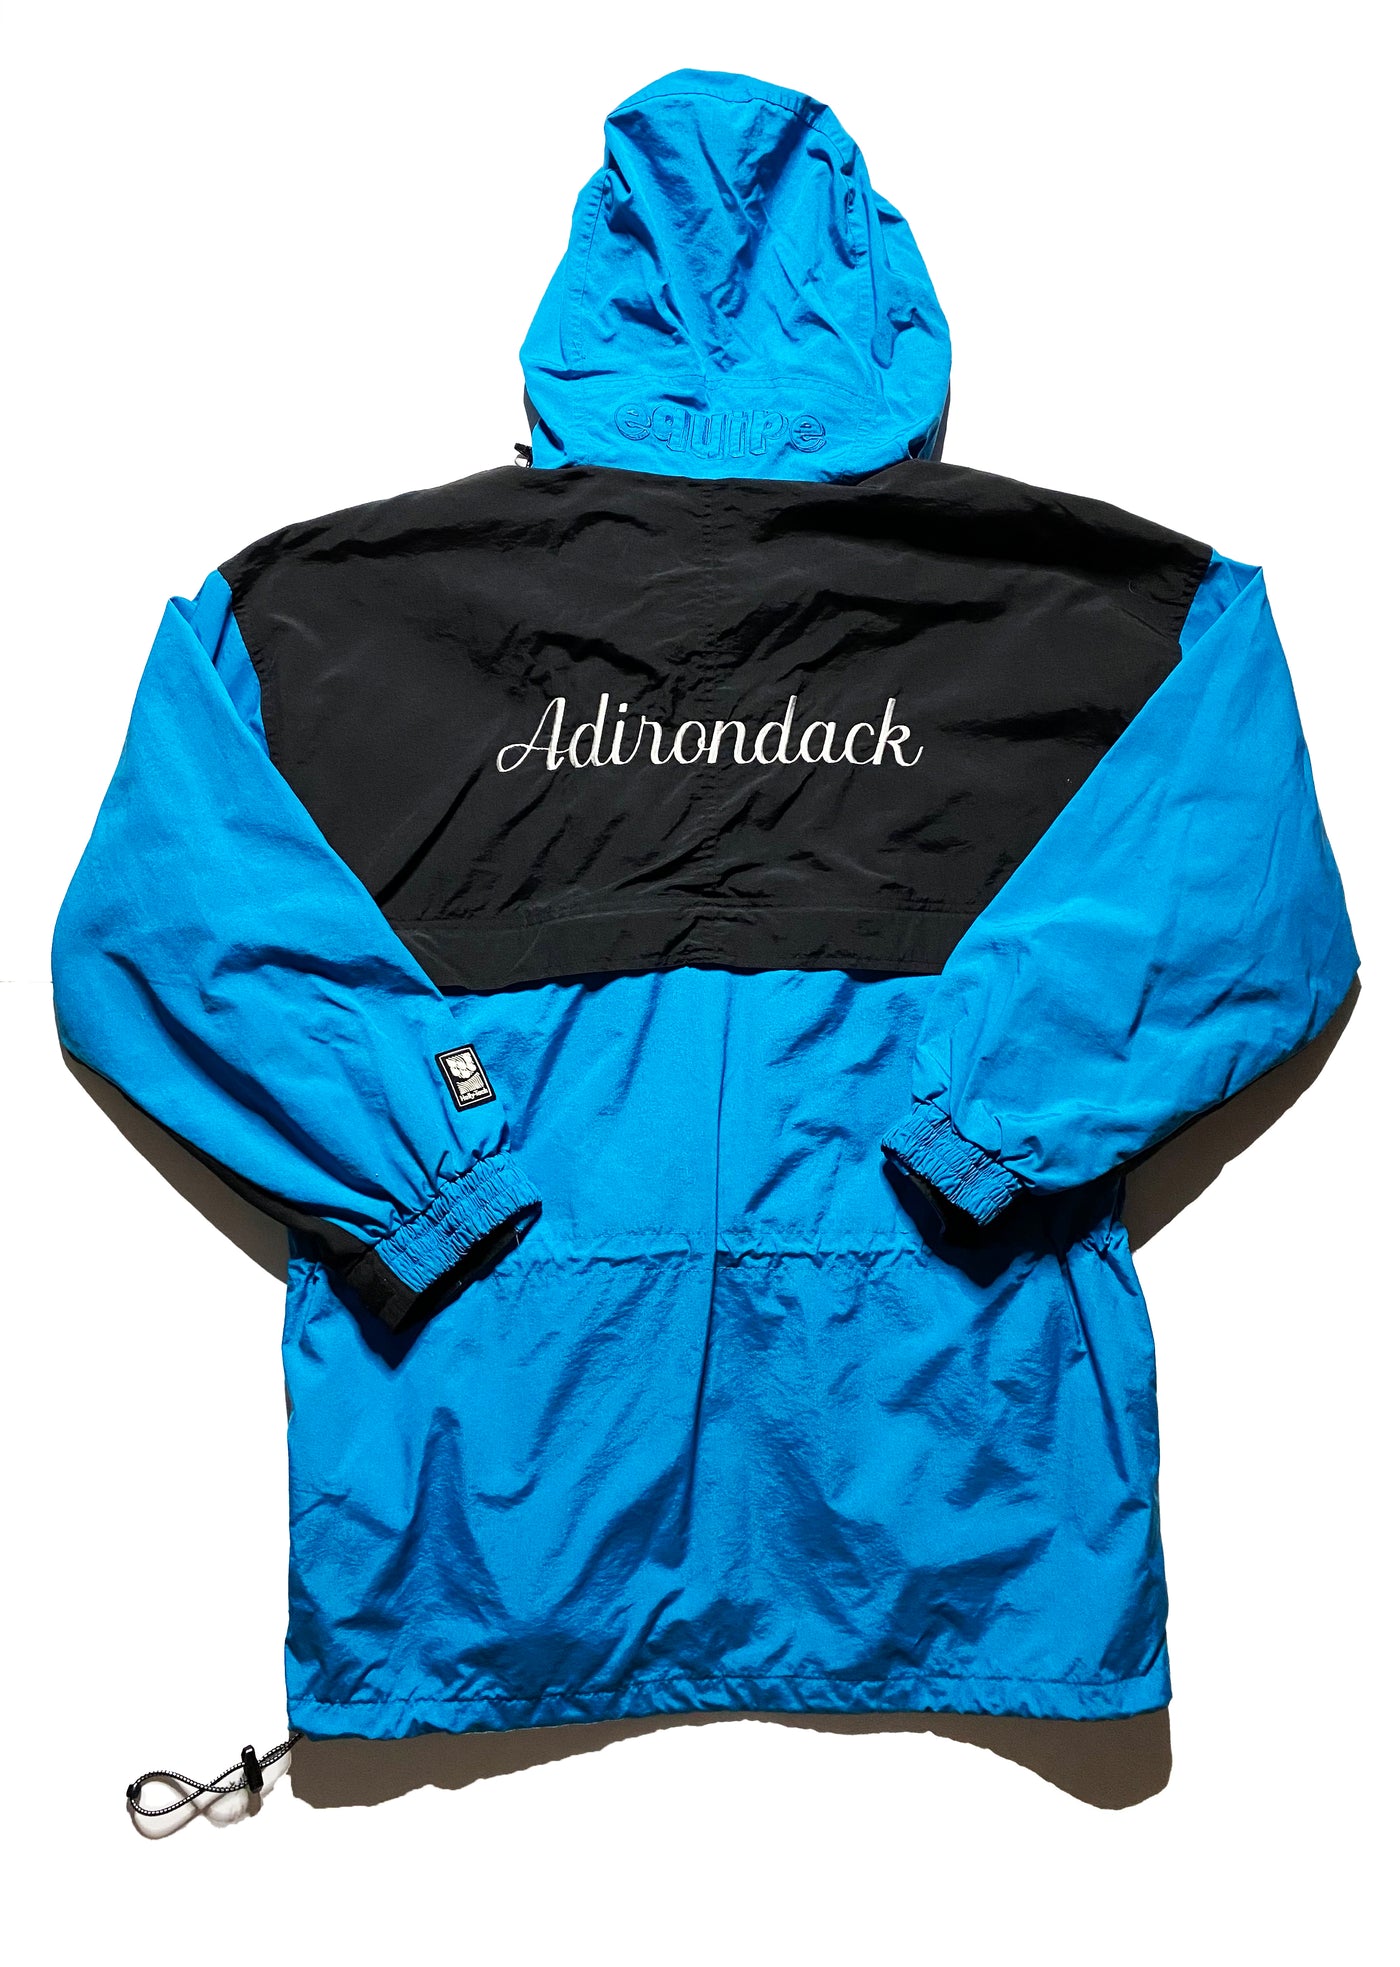 Vintage Helly Hansen Adirondack Equipe Jacket